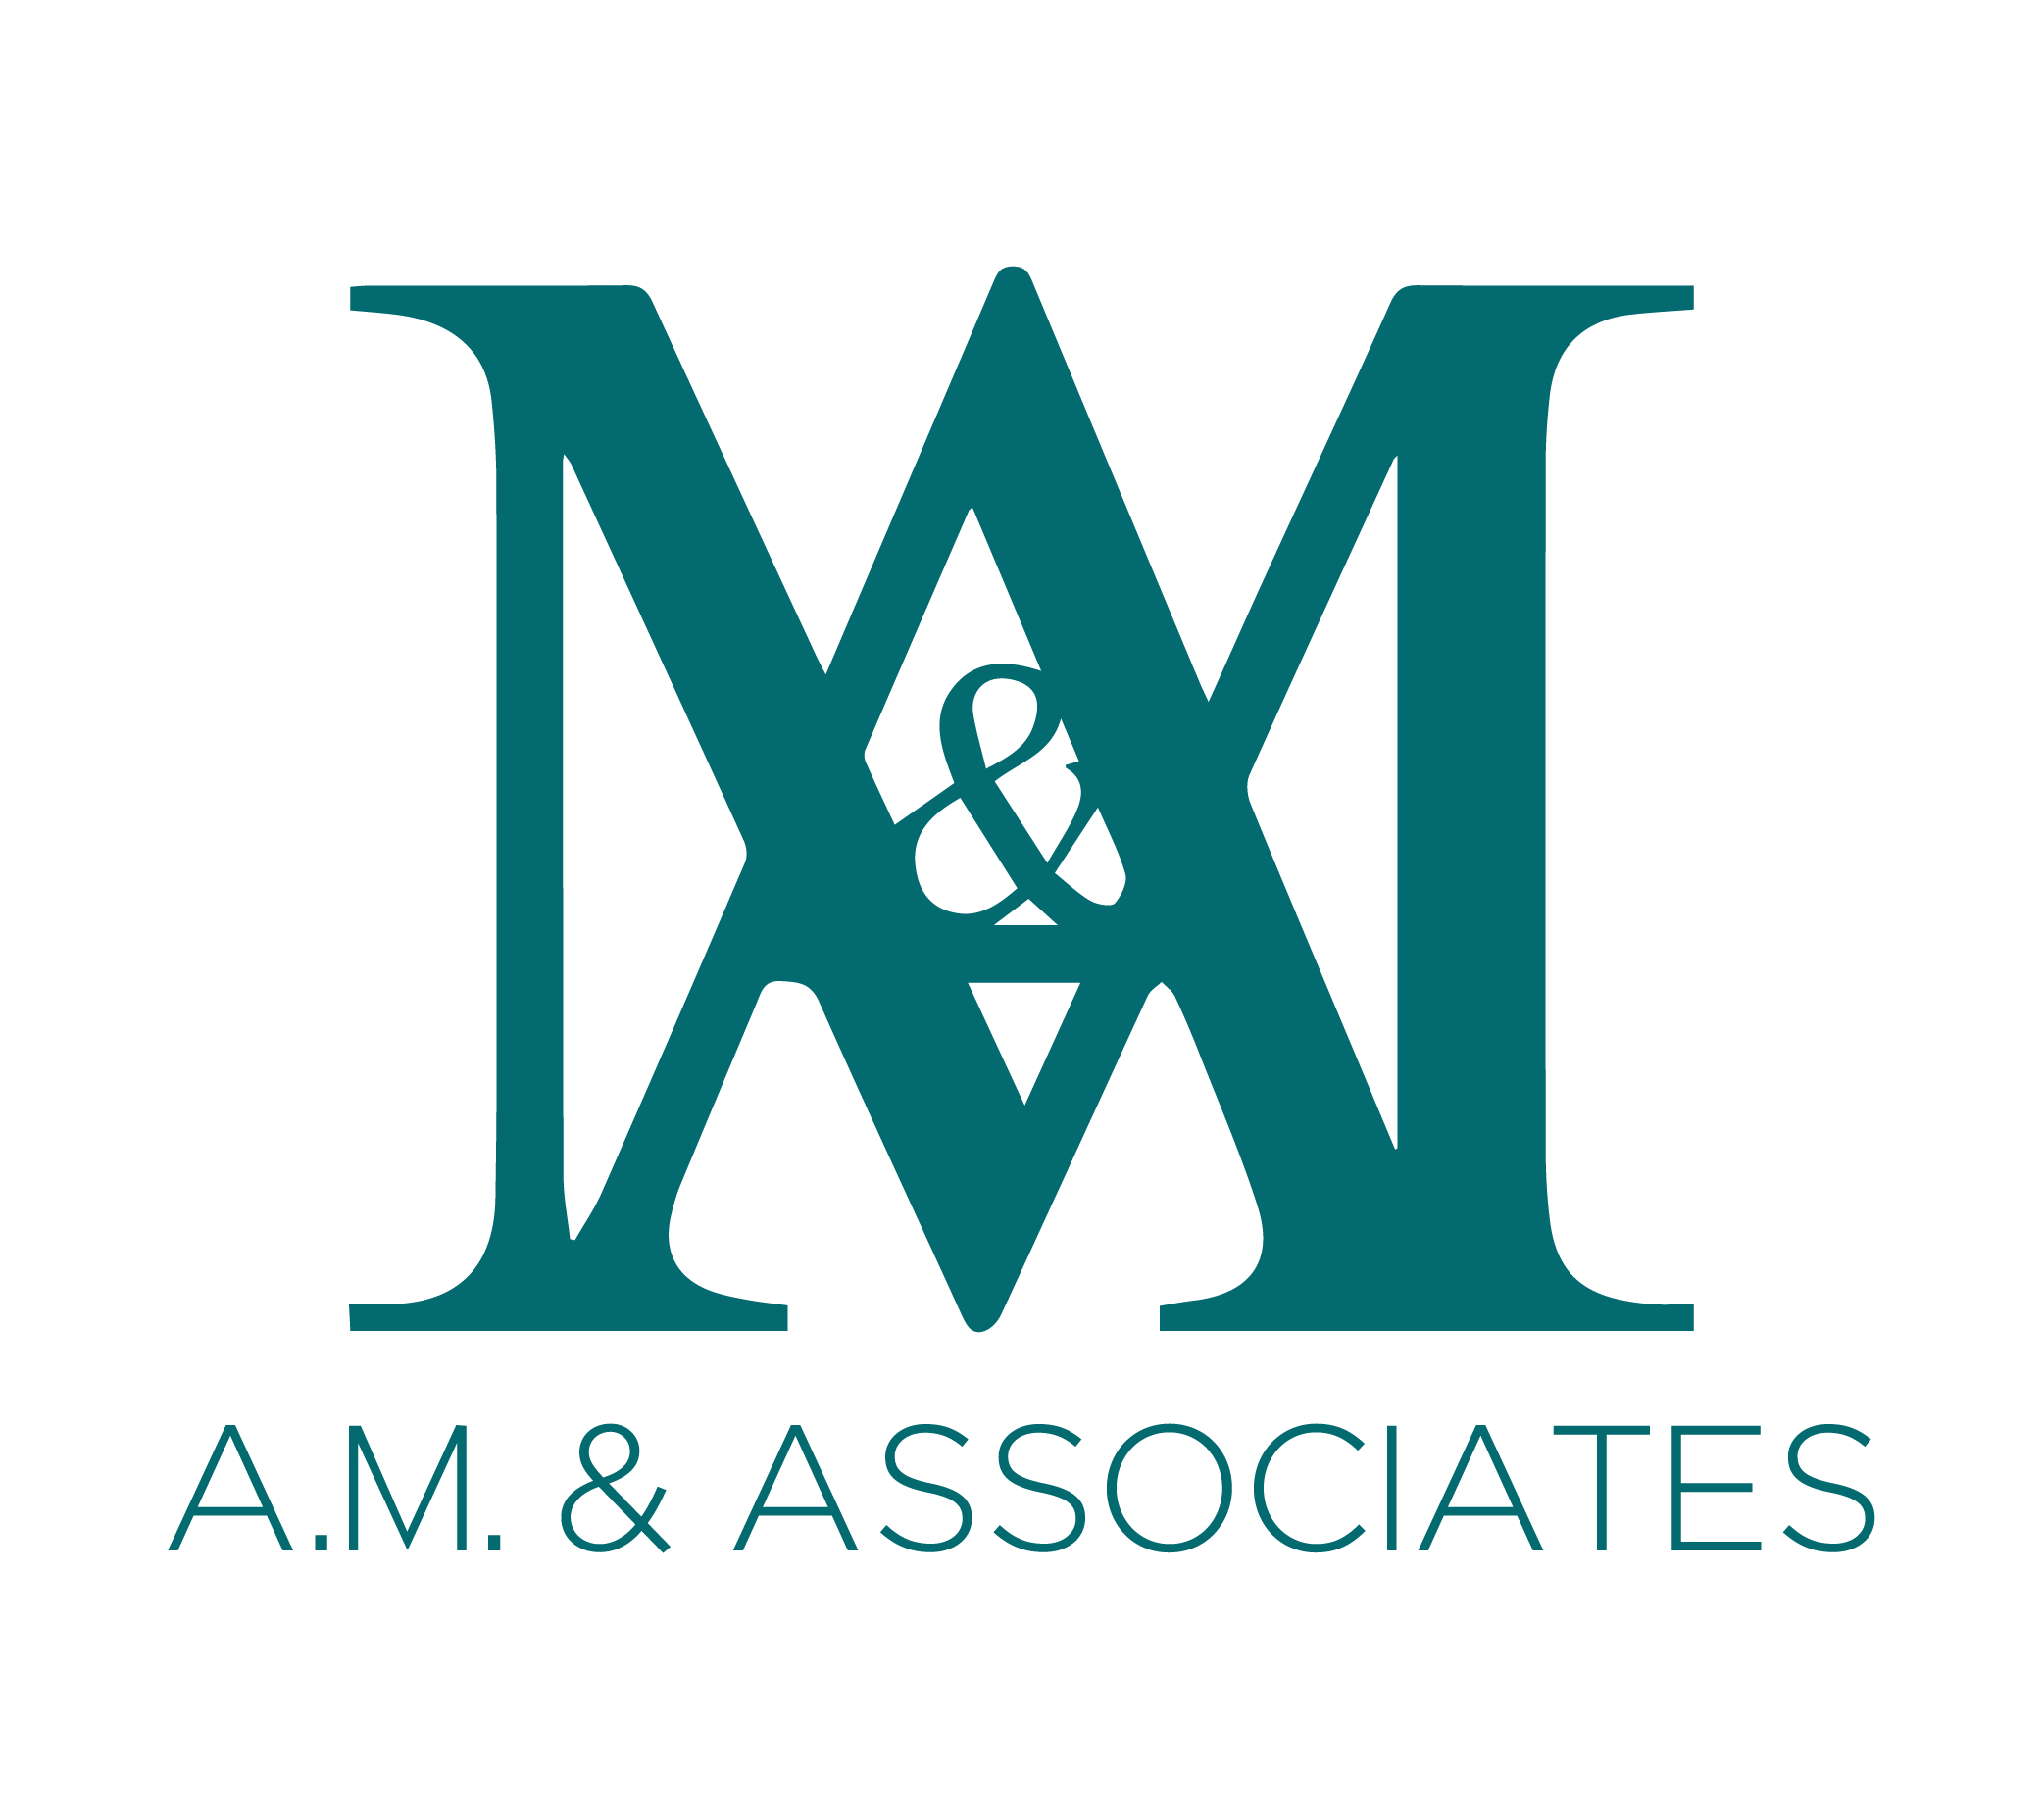 A.M. & Associates